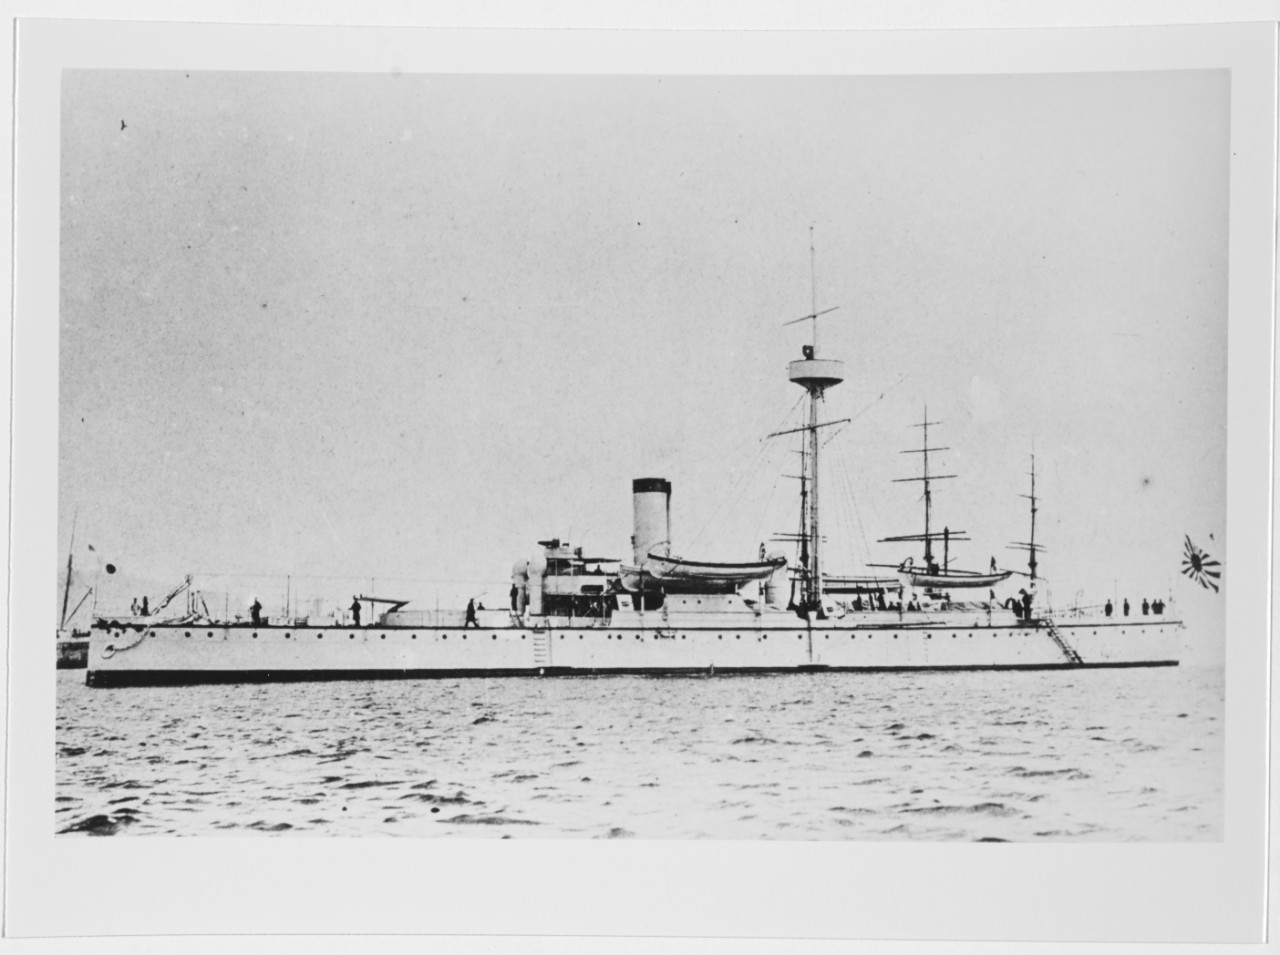 SAI YEN (Japanese Protected Cruiser, 1883-1904)